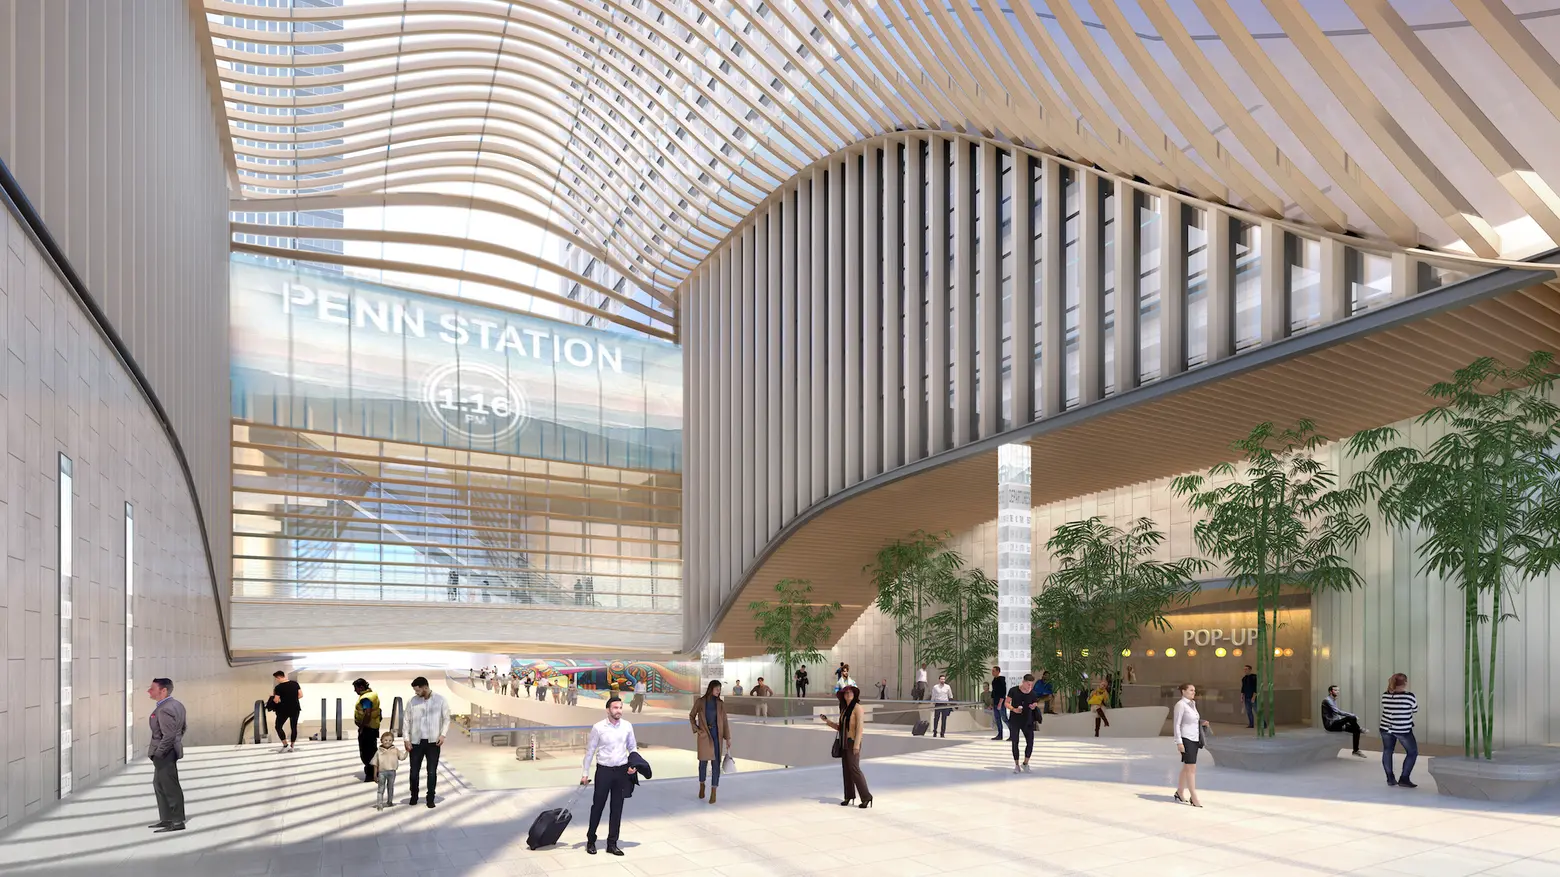 MSG should stay above Penn Station, says Manhattan borough president